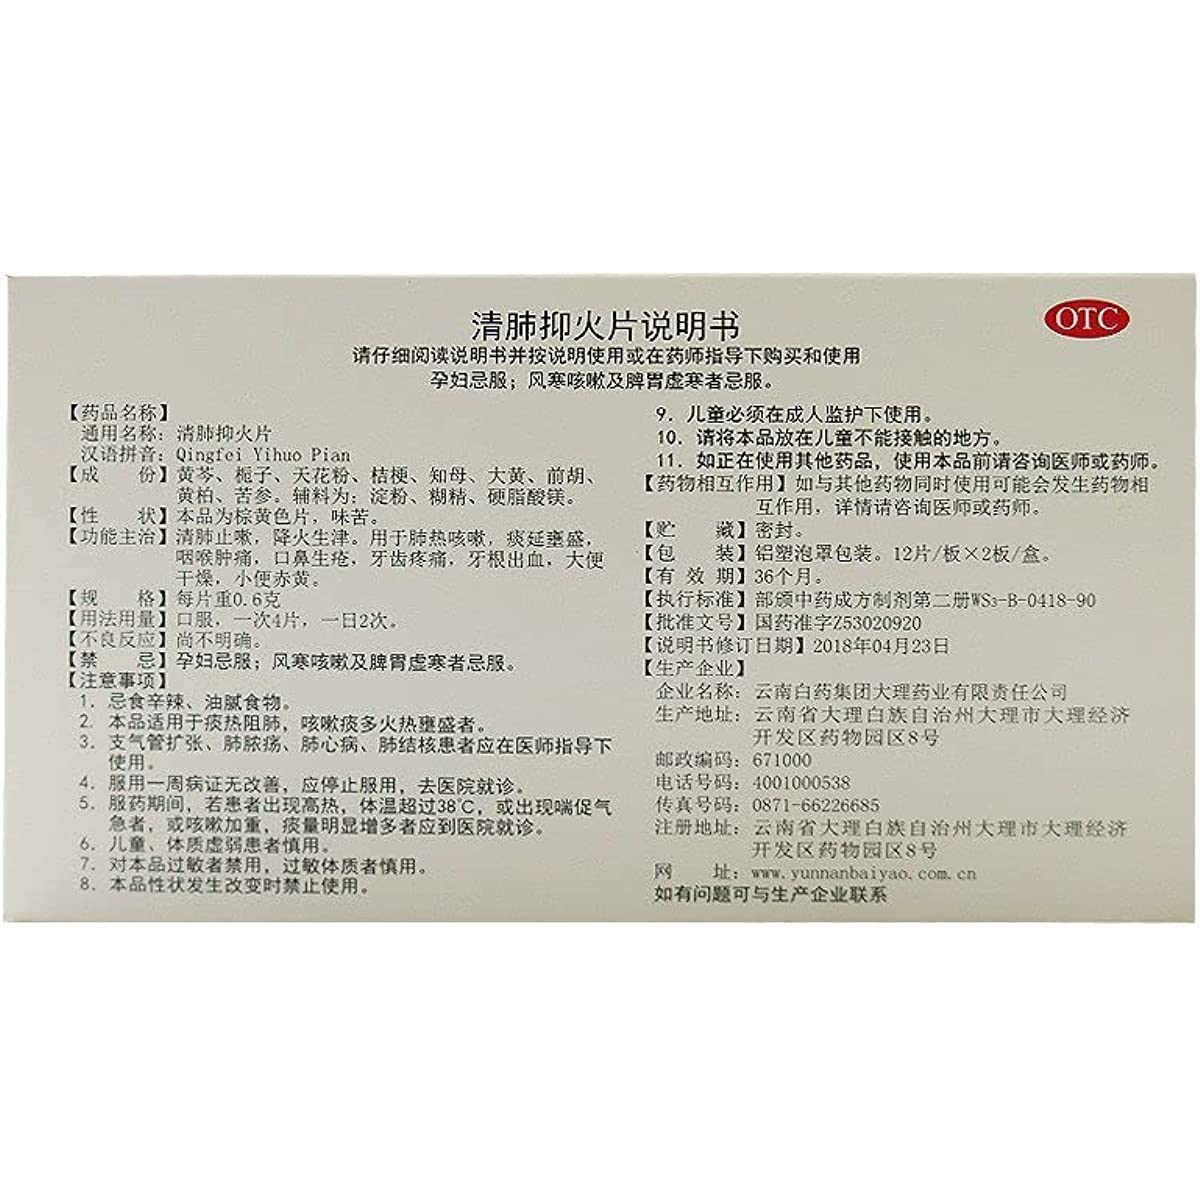 1 Box, YNBY Qingfei Yihuo Pian  0.6g*24 Tablets / Box 云南白药 清肺抑火片